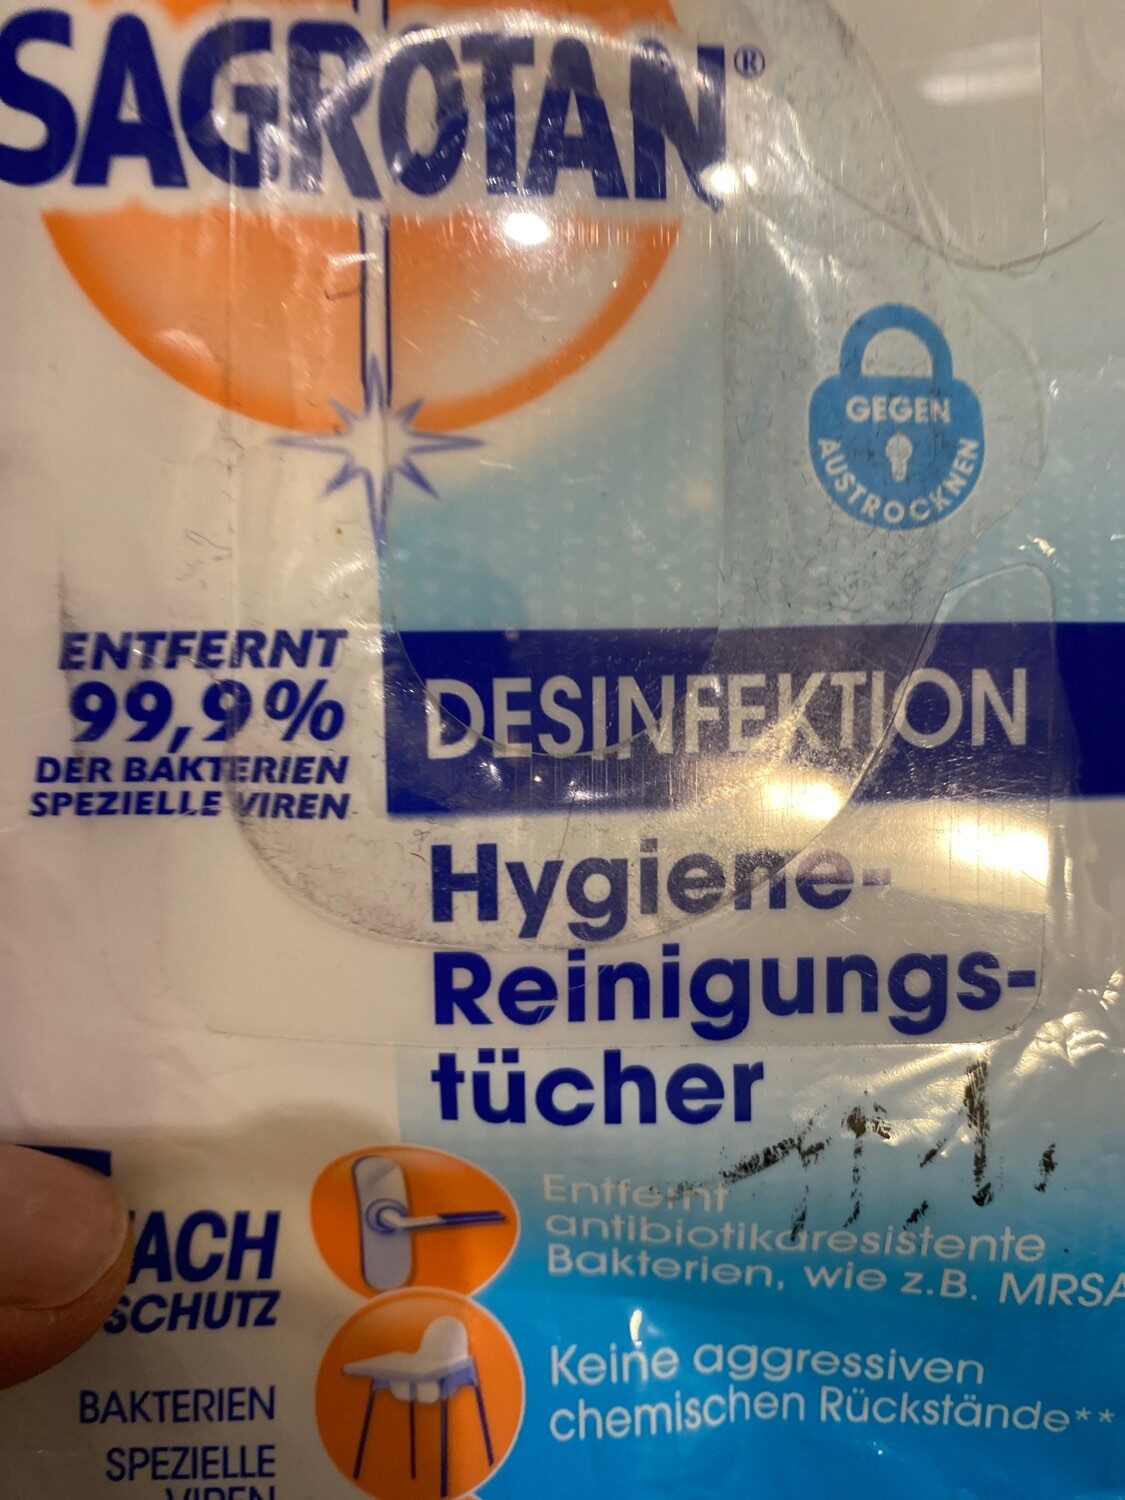 Sagrotan Hygiene Reinigungstücher - Product - de